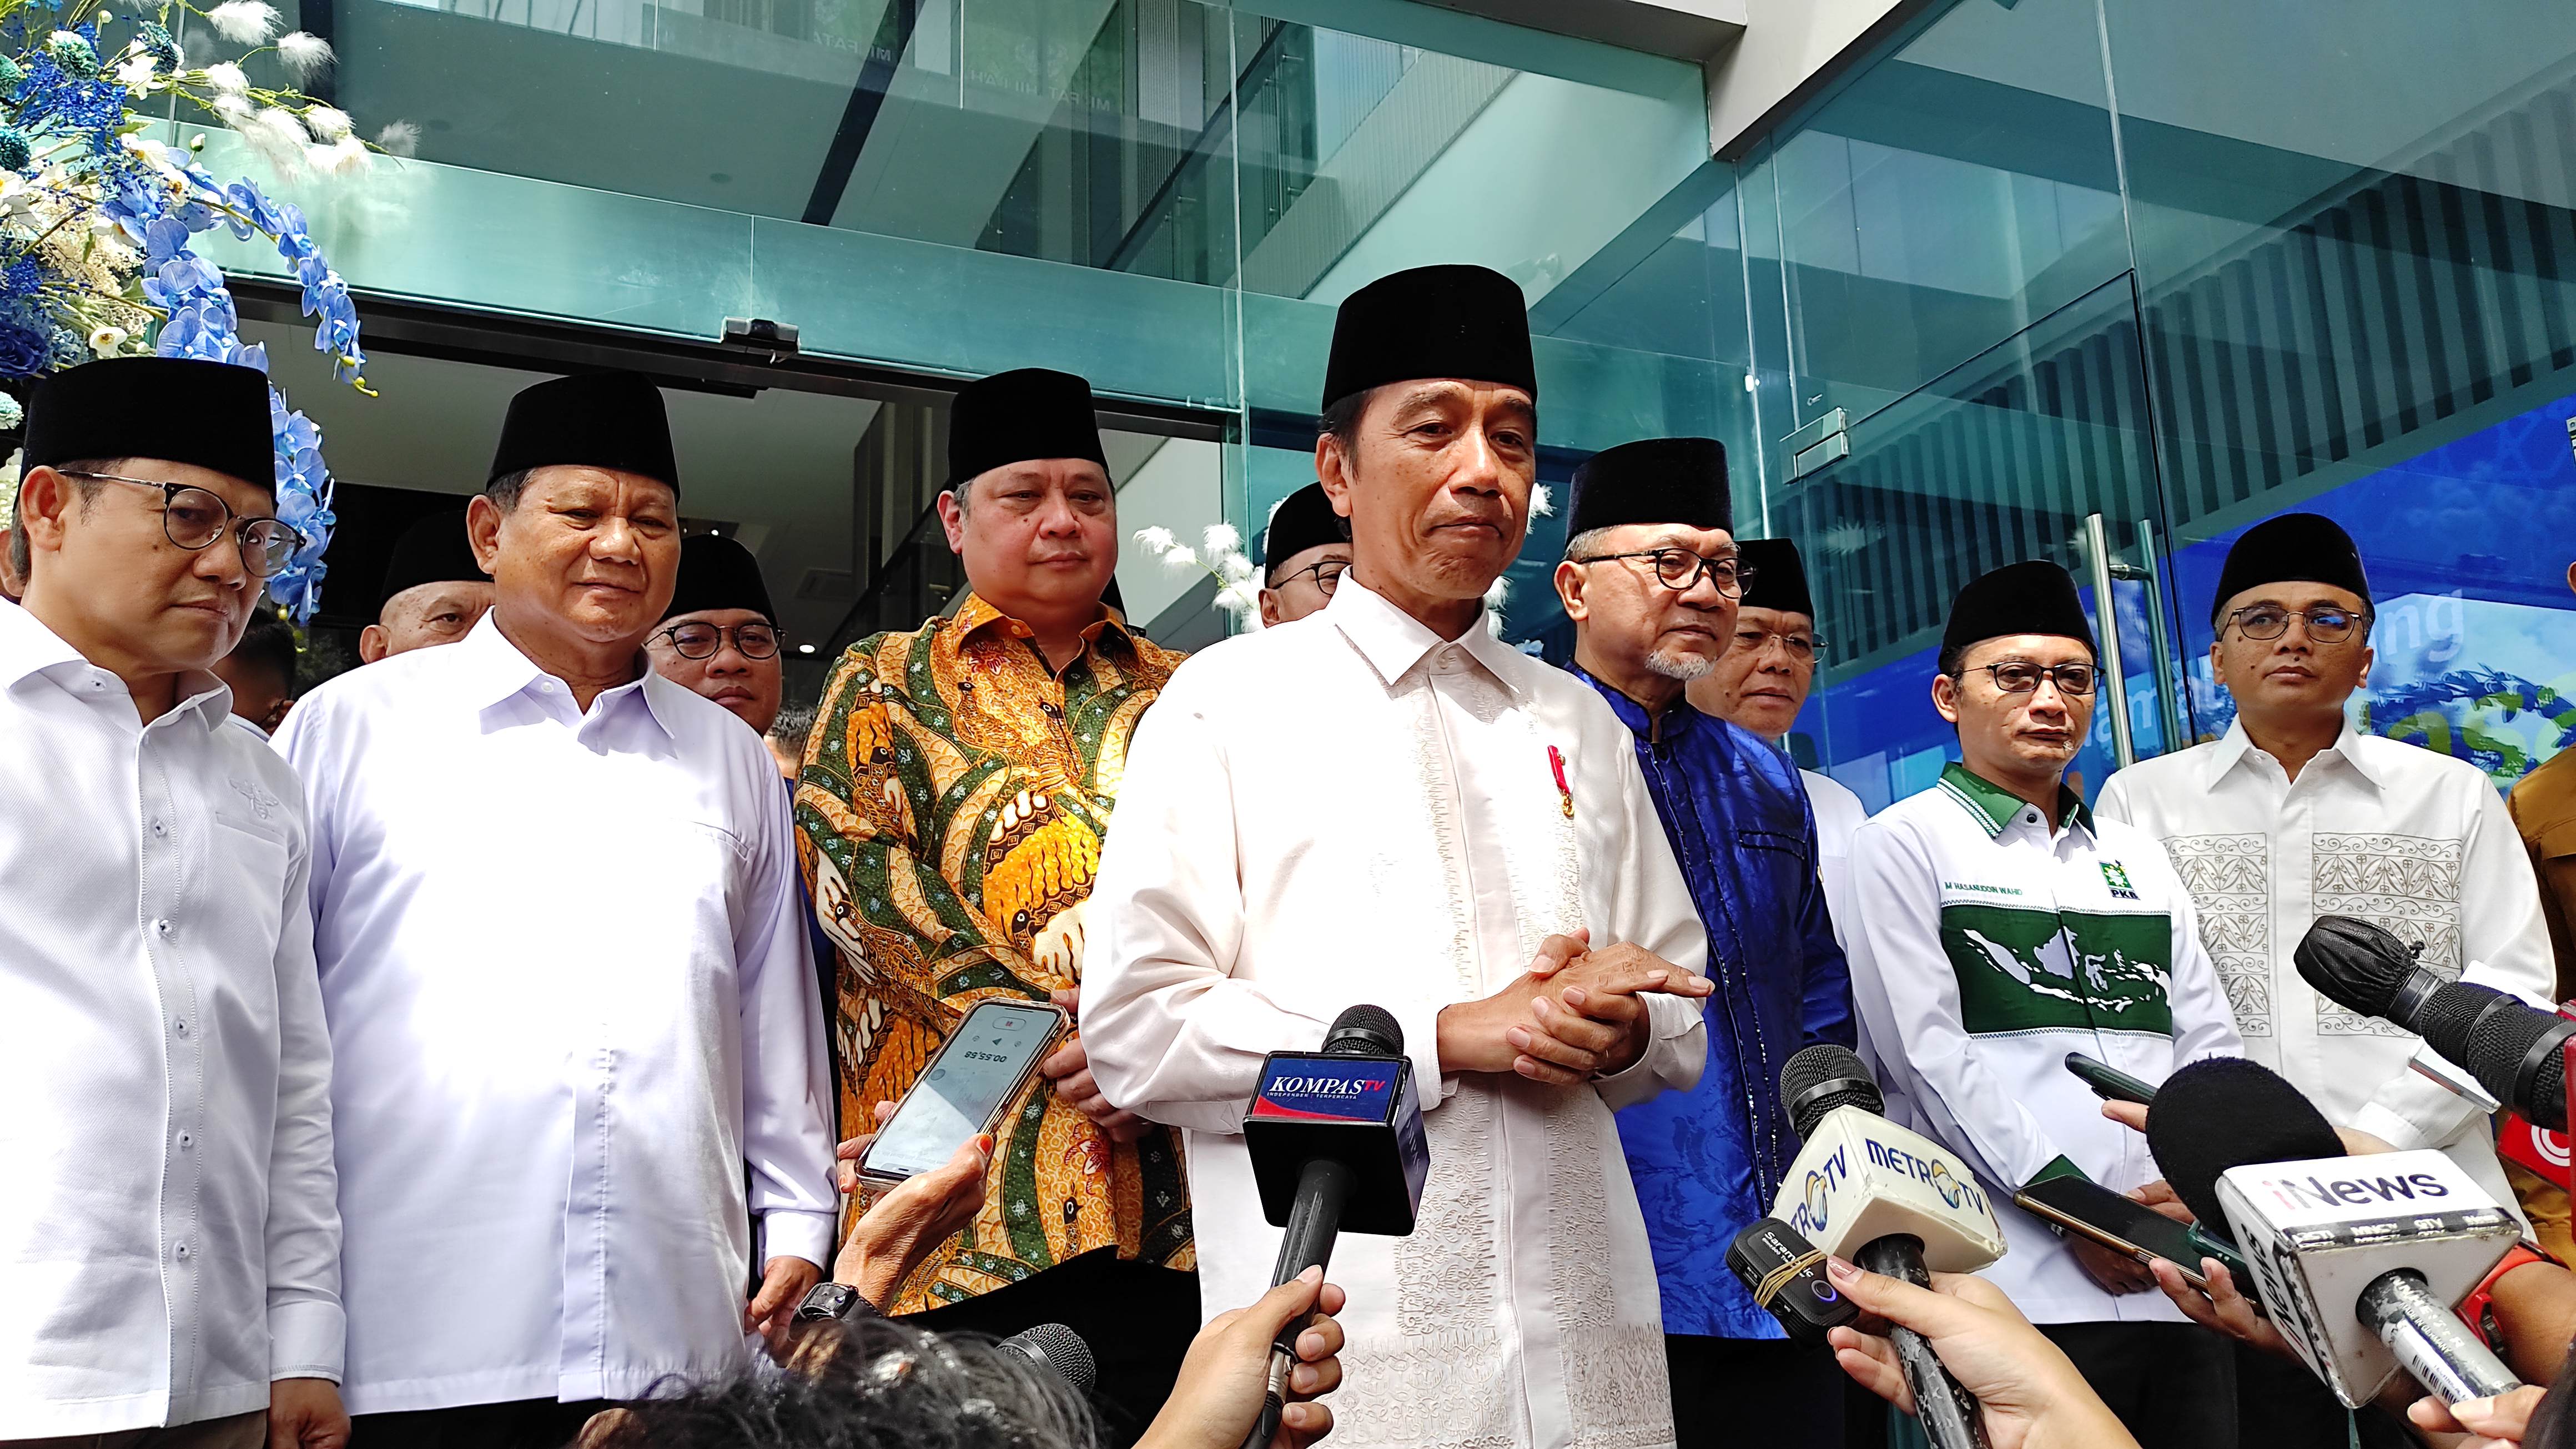 Direktur ALGORITMA Sebut Endorsement Jokowi Tidak Akan Berdampak Besar Kepada Masyarakat